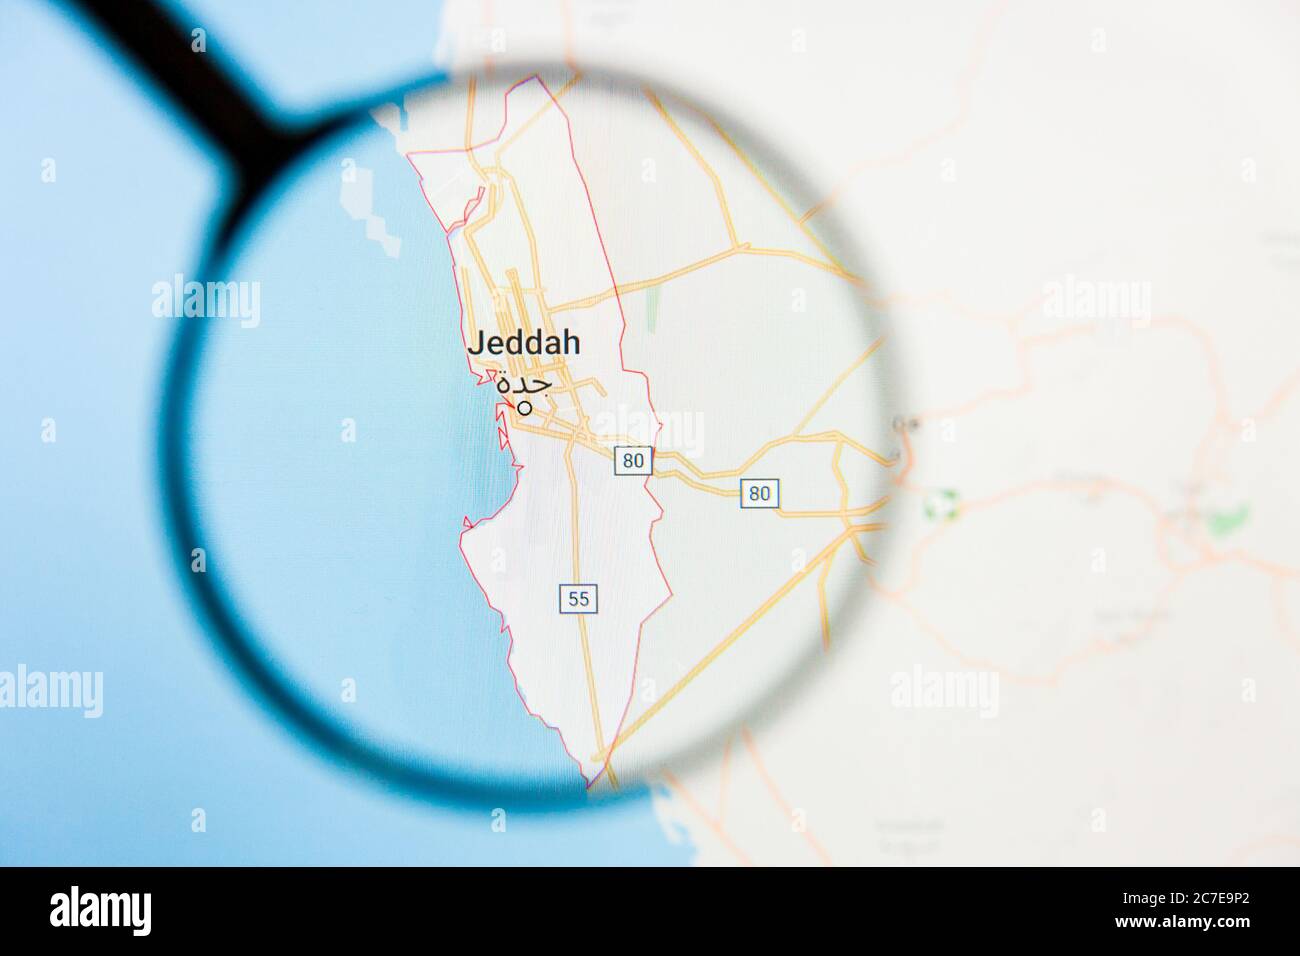 Jiddah, Saudi Arabia city visualization illustrative concept on display screen through magnifying glass Stock Photo